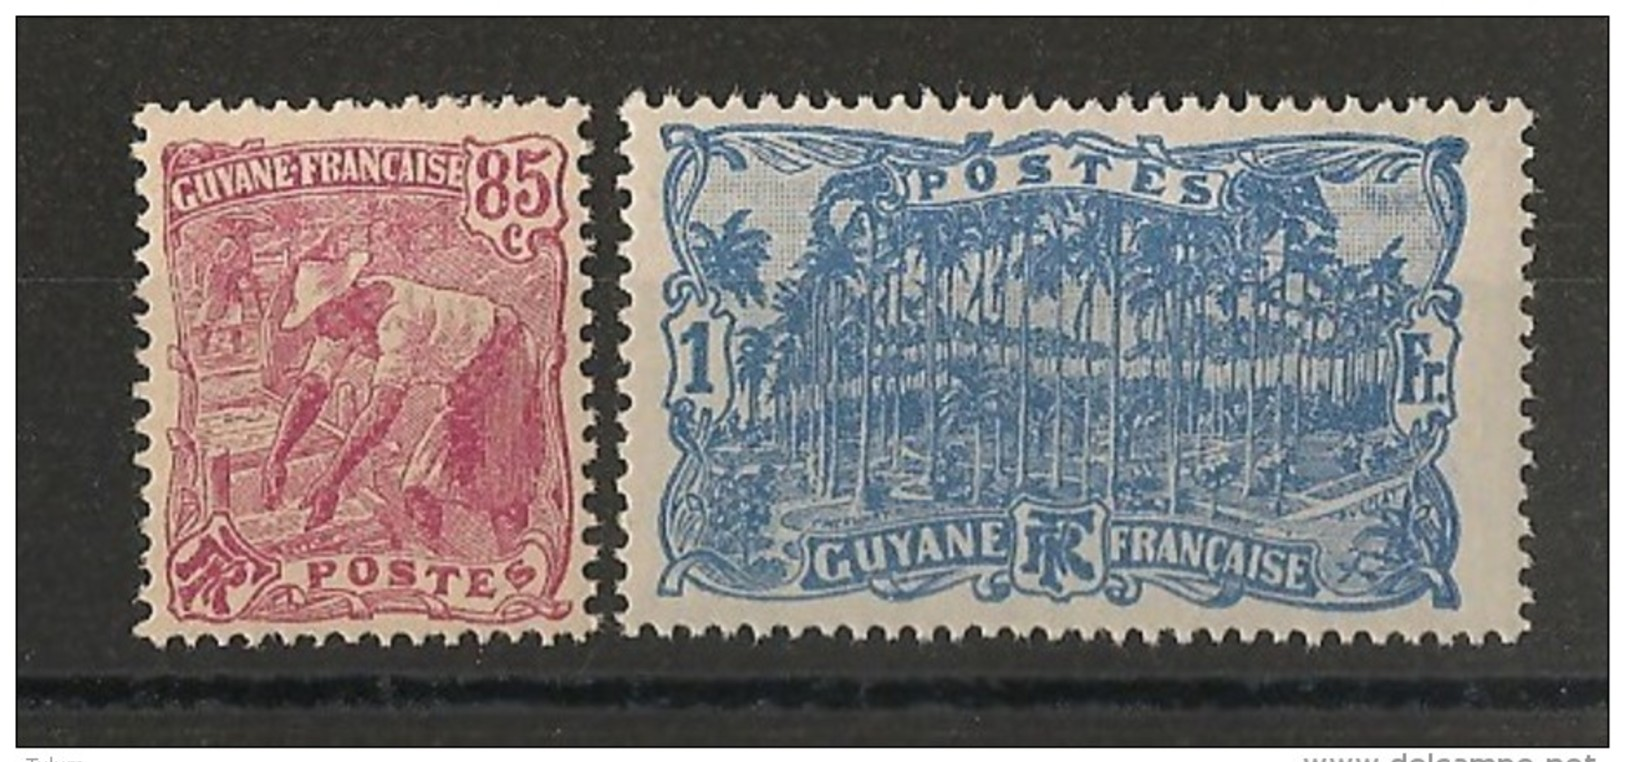 Guyane N°Yv. 86 Et 87 - Neuf Luxe ** - MNH - Postfrisch - Cote 2.2 EUR - Nuovi